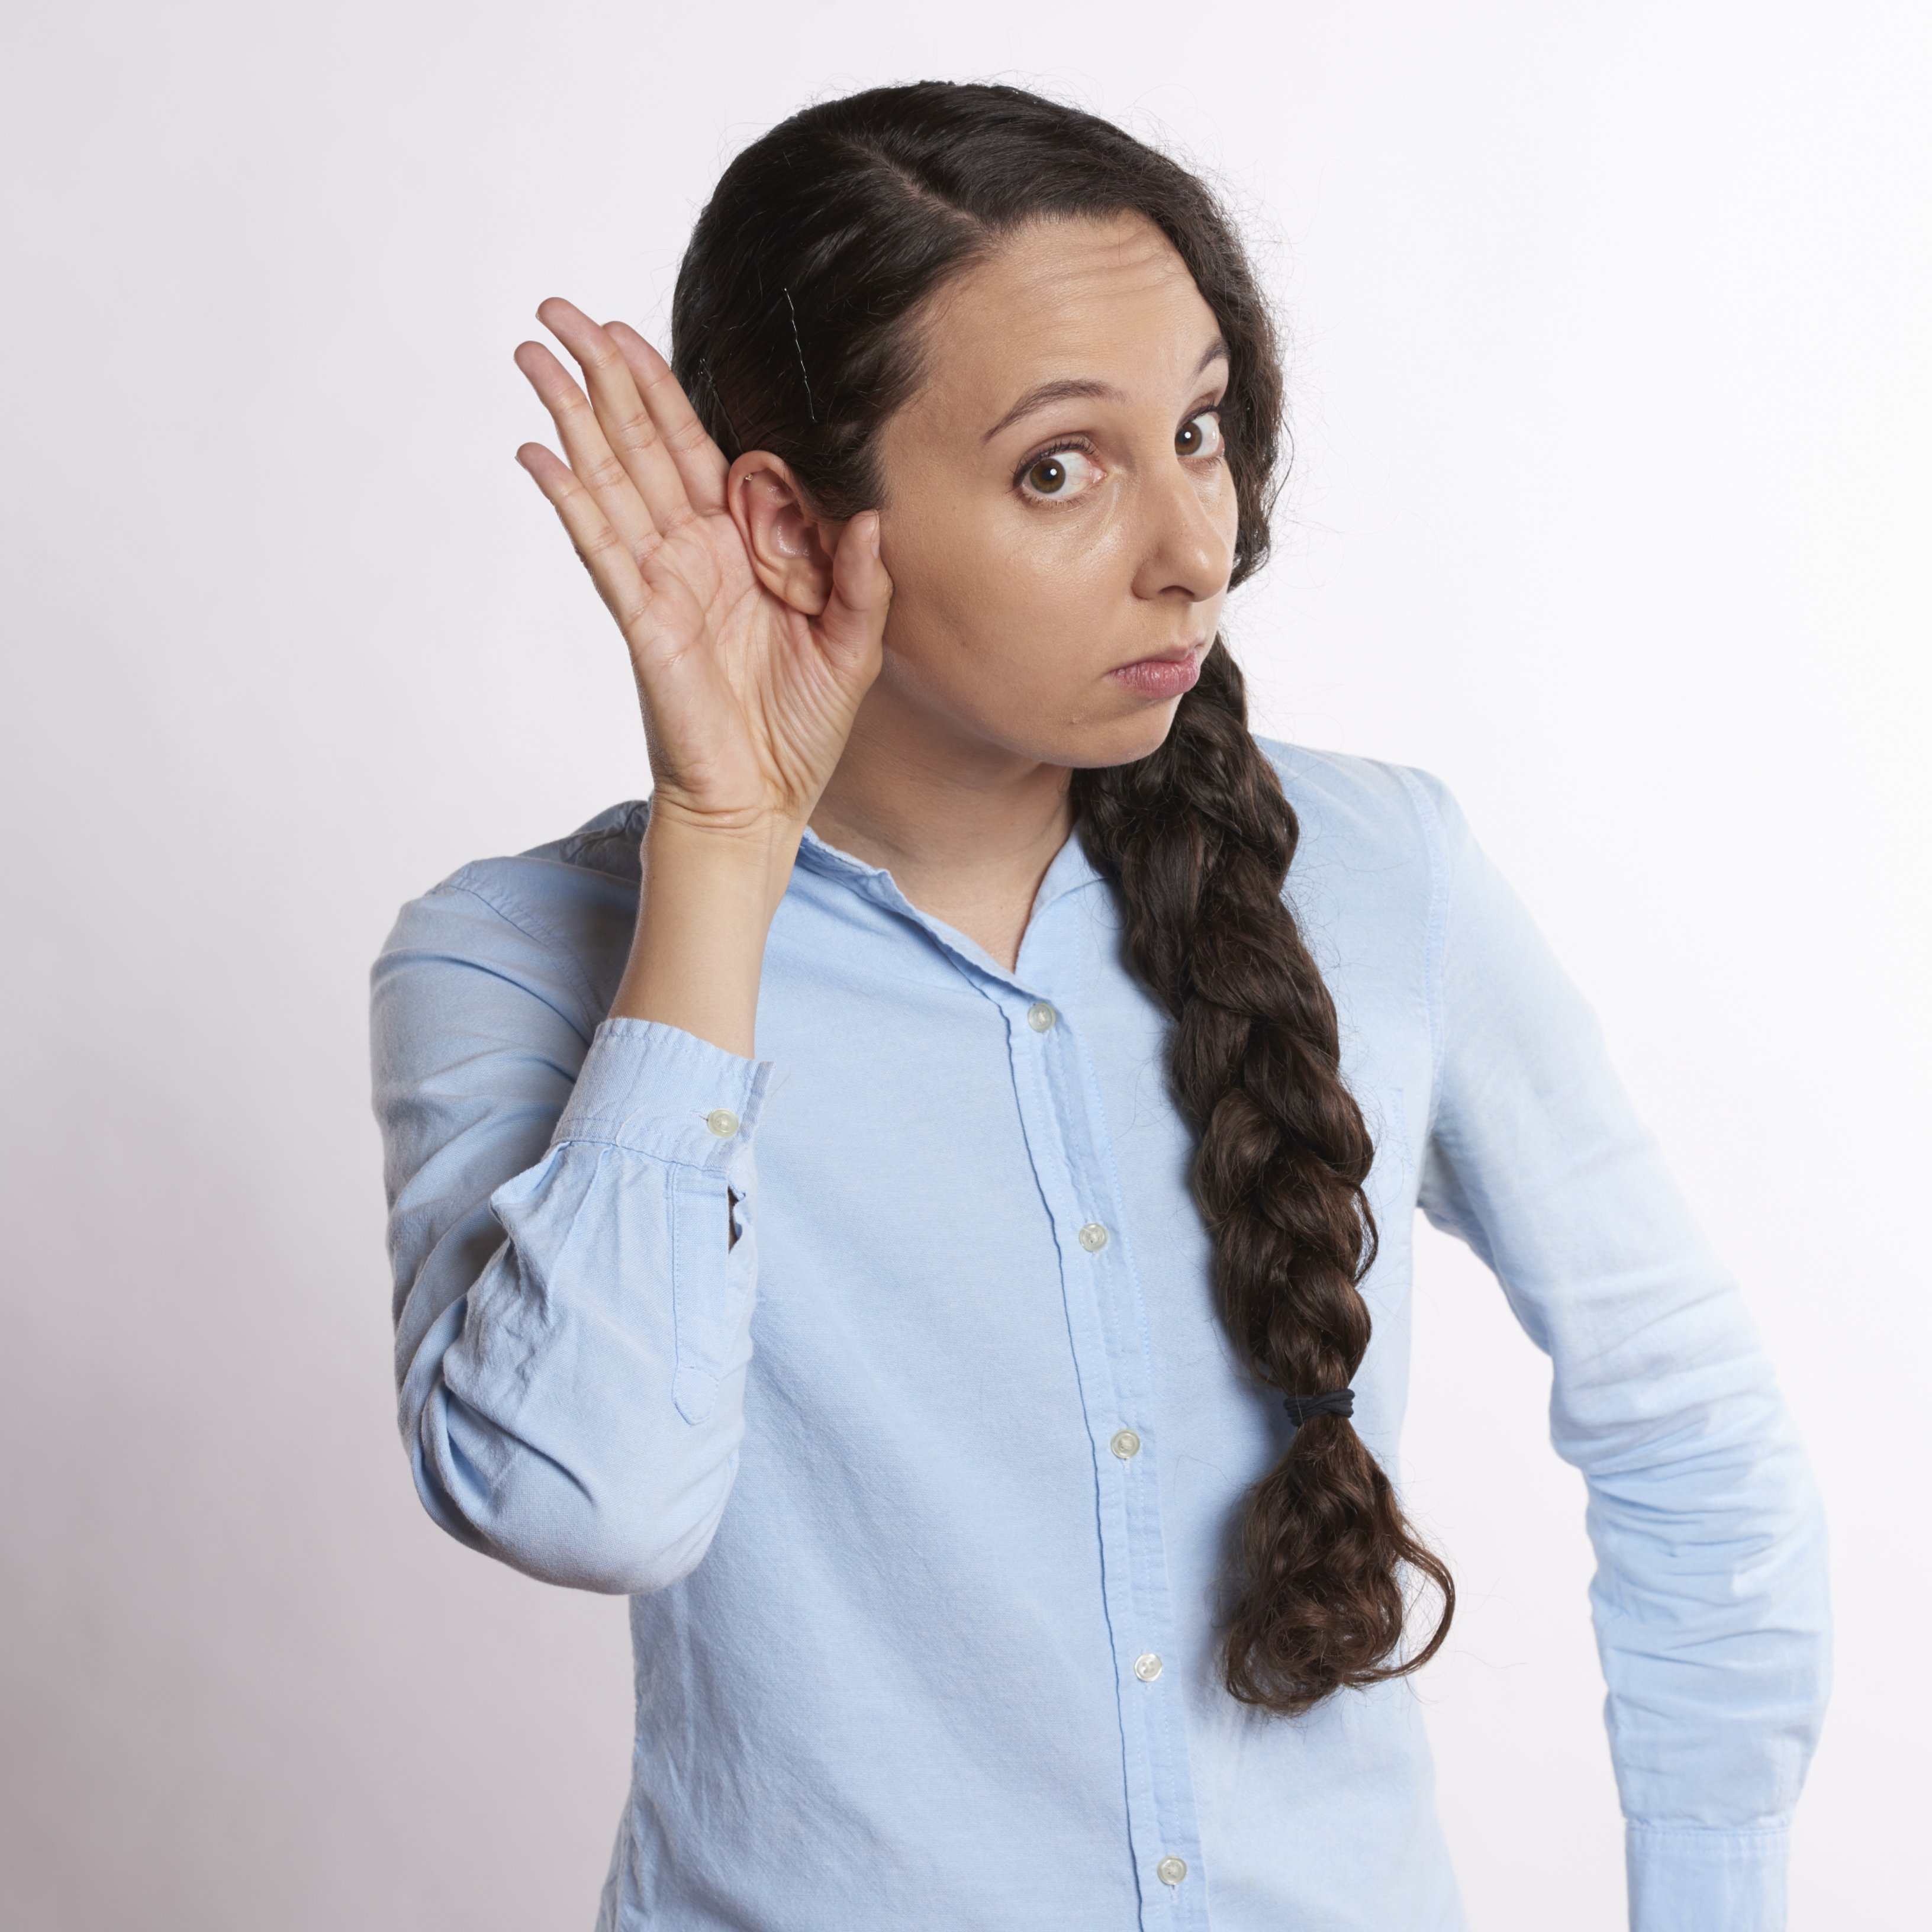 Consejos para ayudar a prevenir la pérdida auditiva